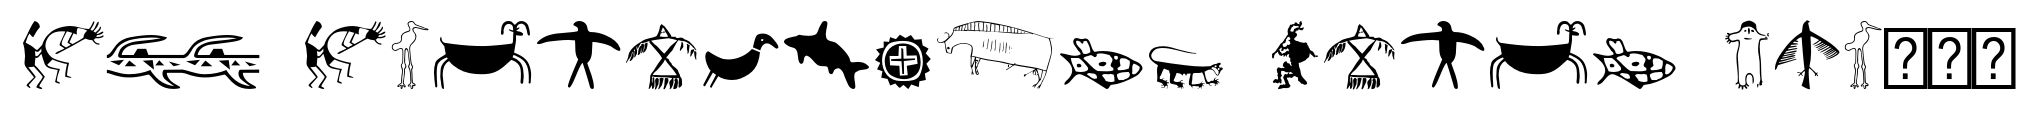 P22 Petroglyphs North American image